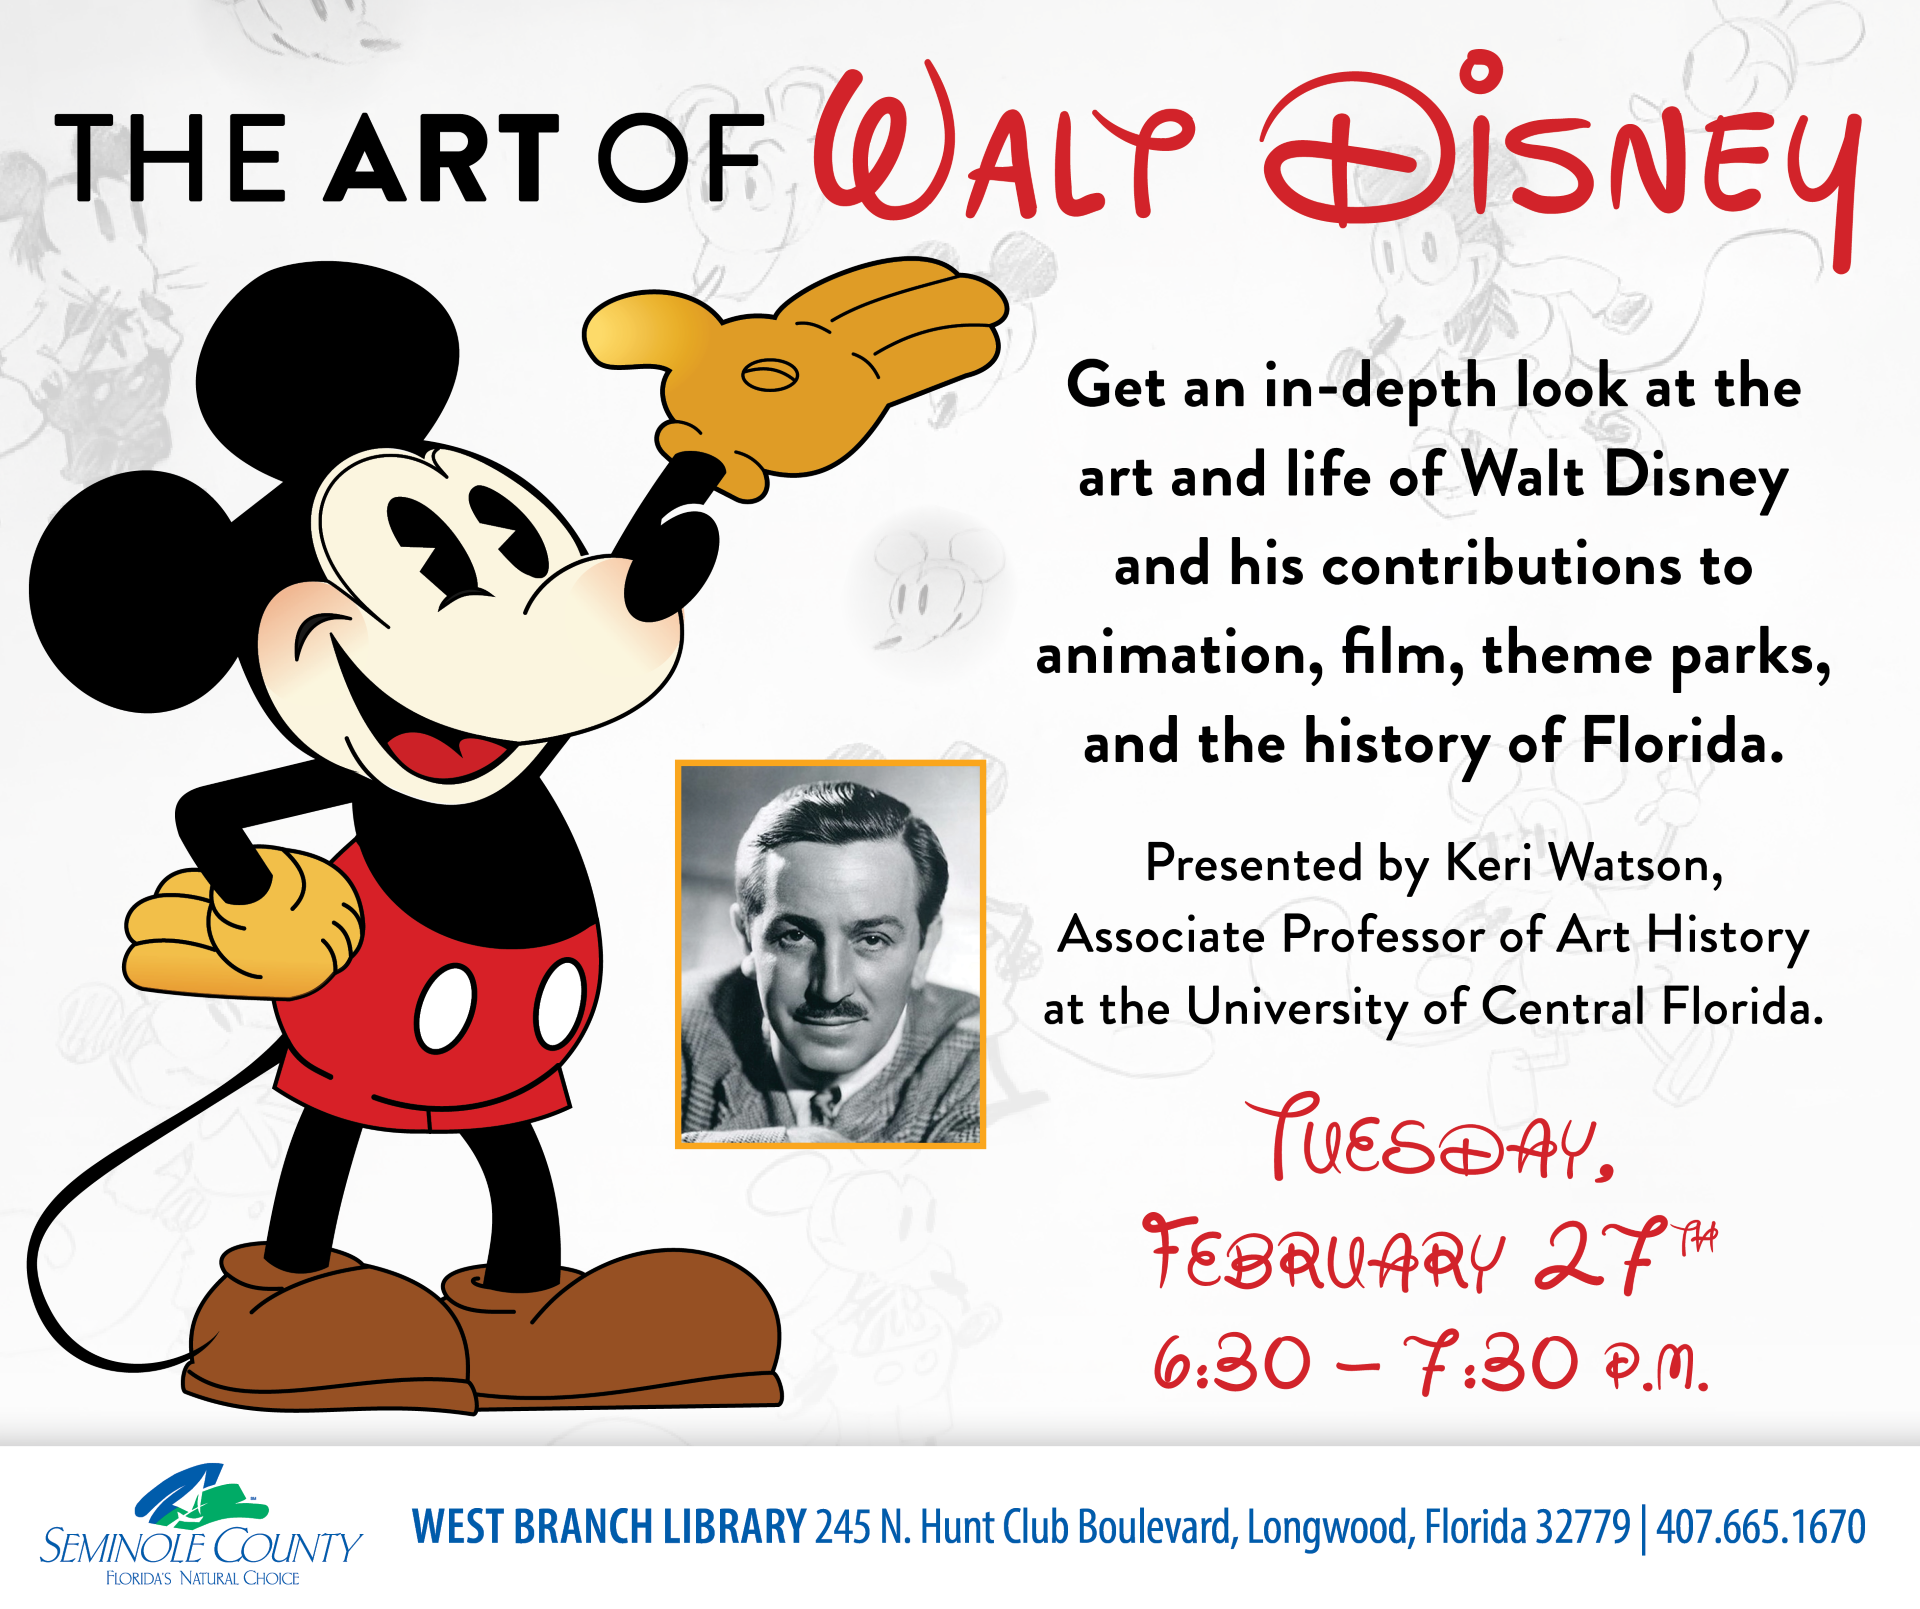 The Art of Walt Disney Program at West Branch Library